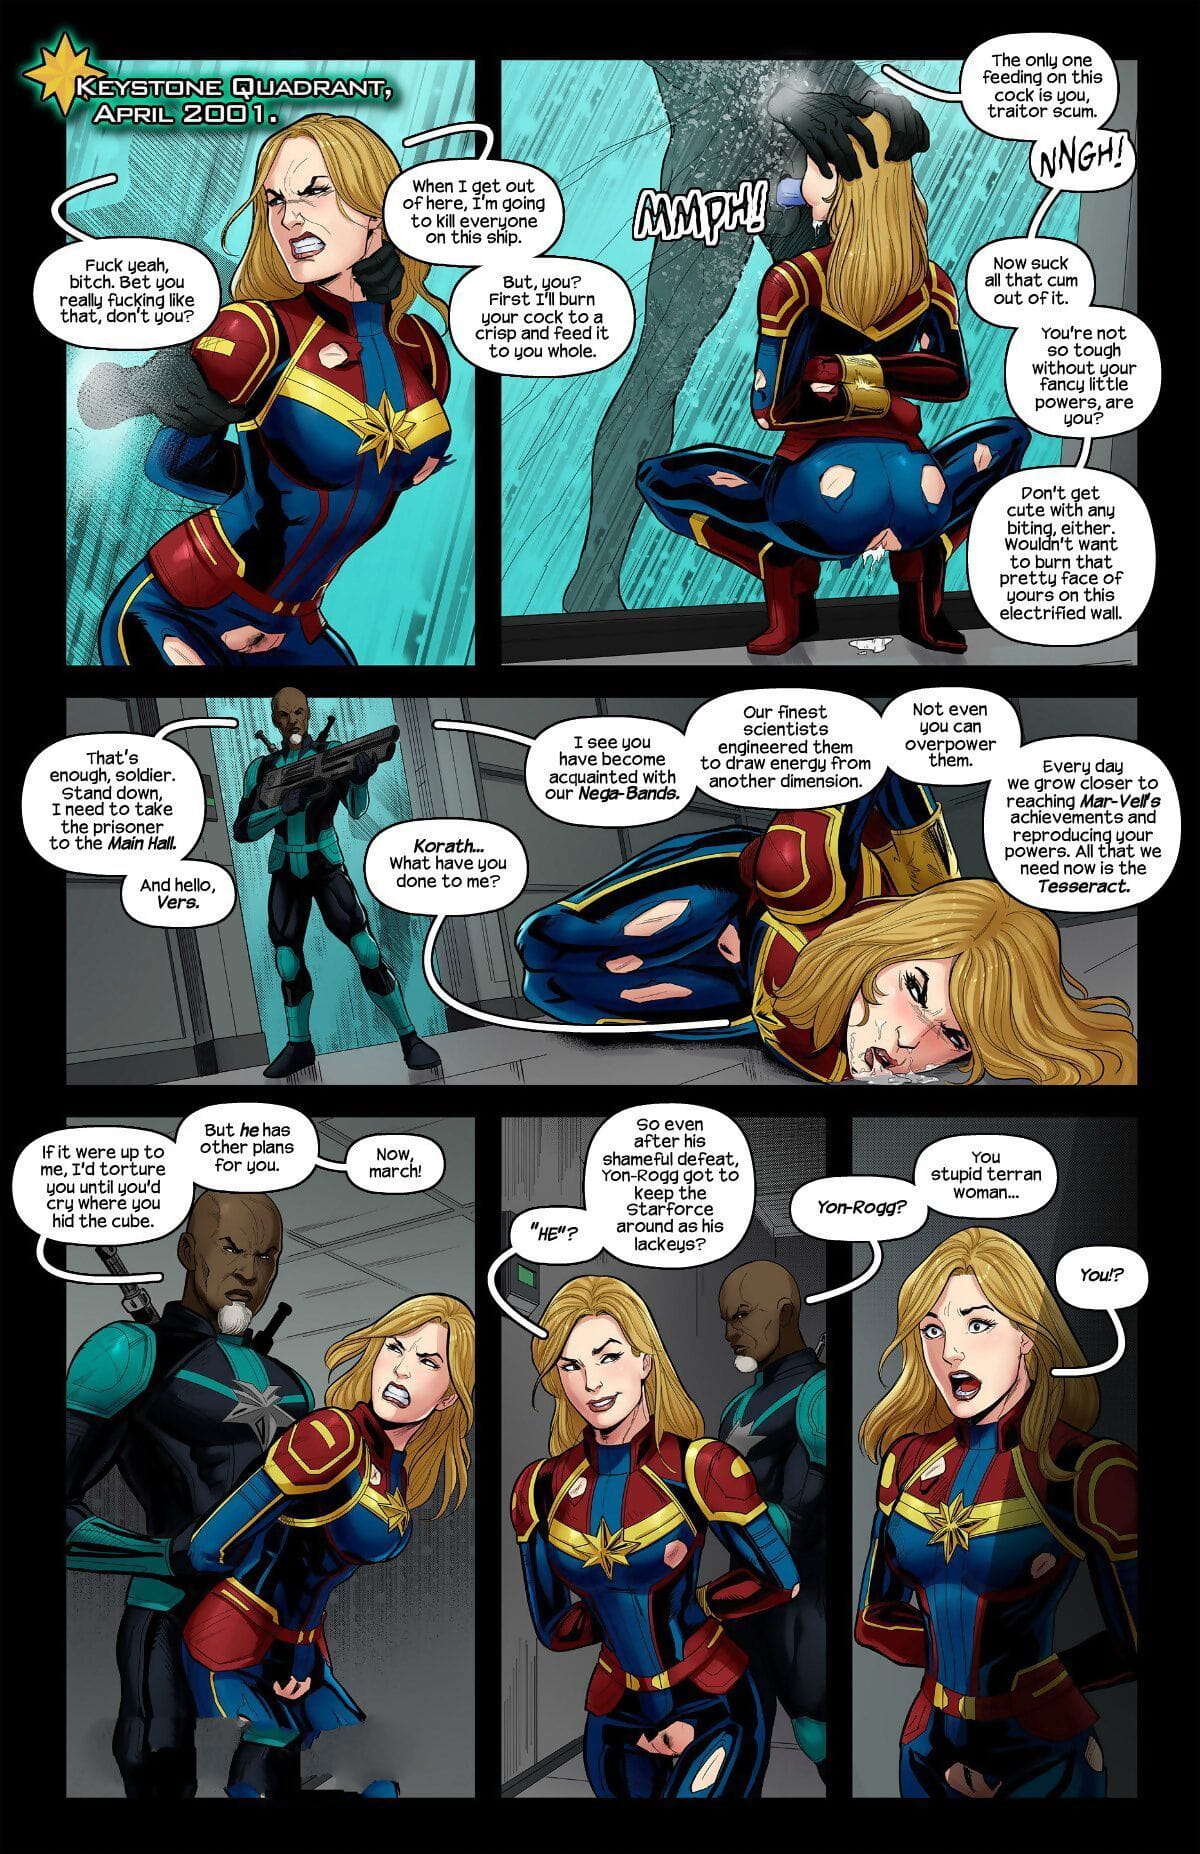 Tracy scops Kapitän Marvel angeklagt page 1